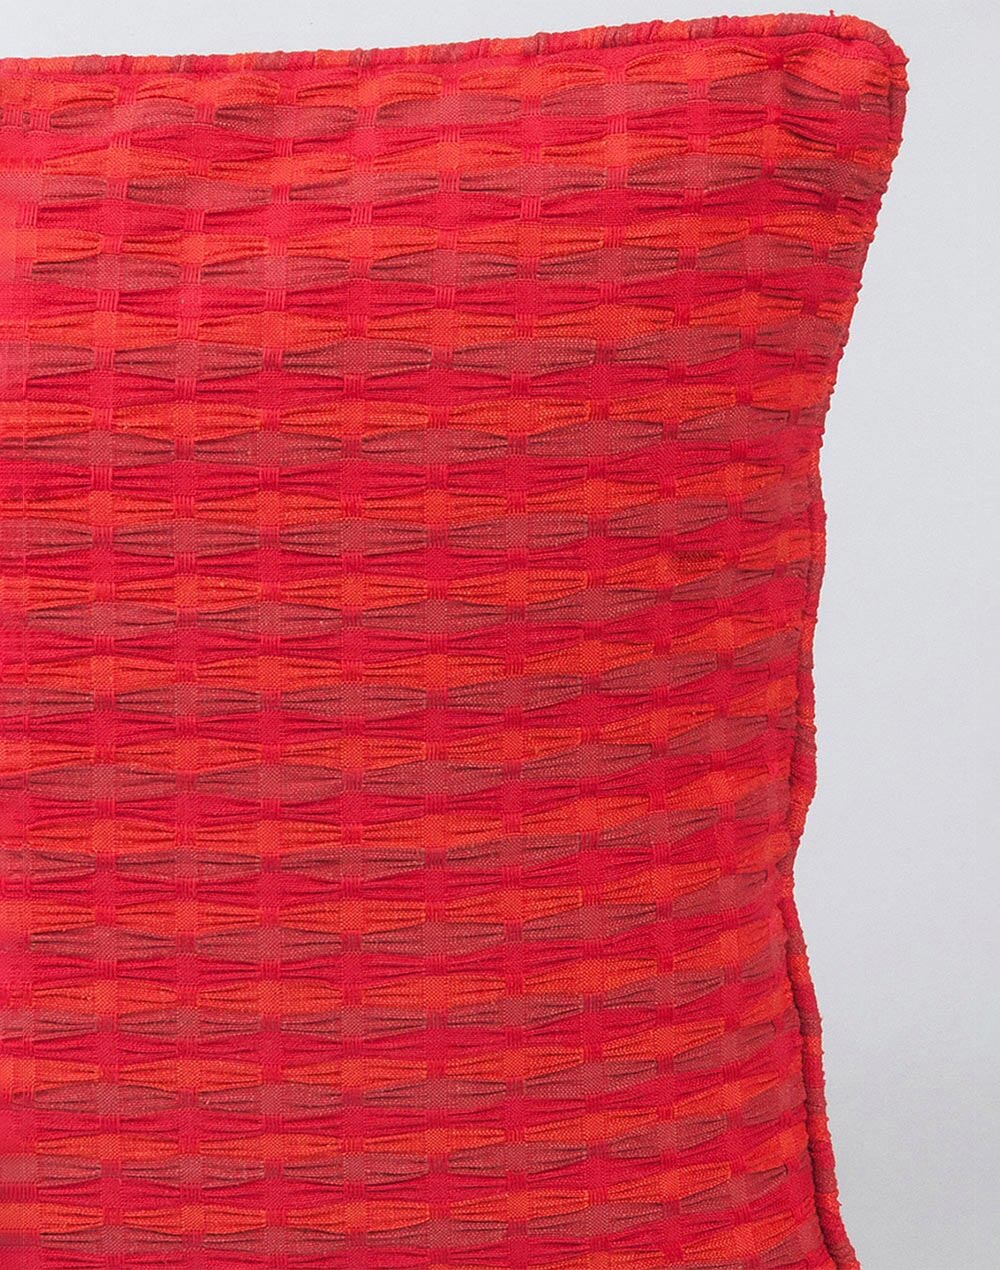 Red Deepali Cotton Cushion Cover 30X30